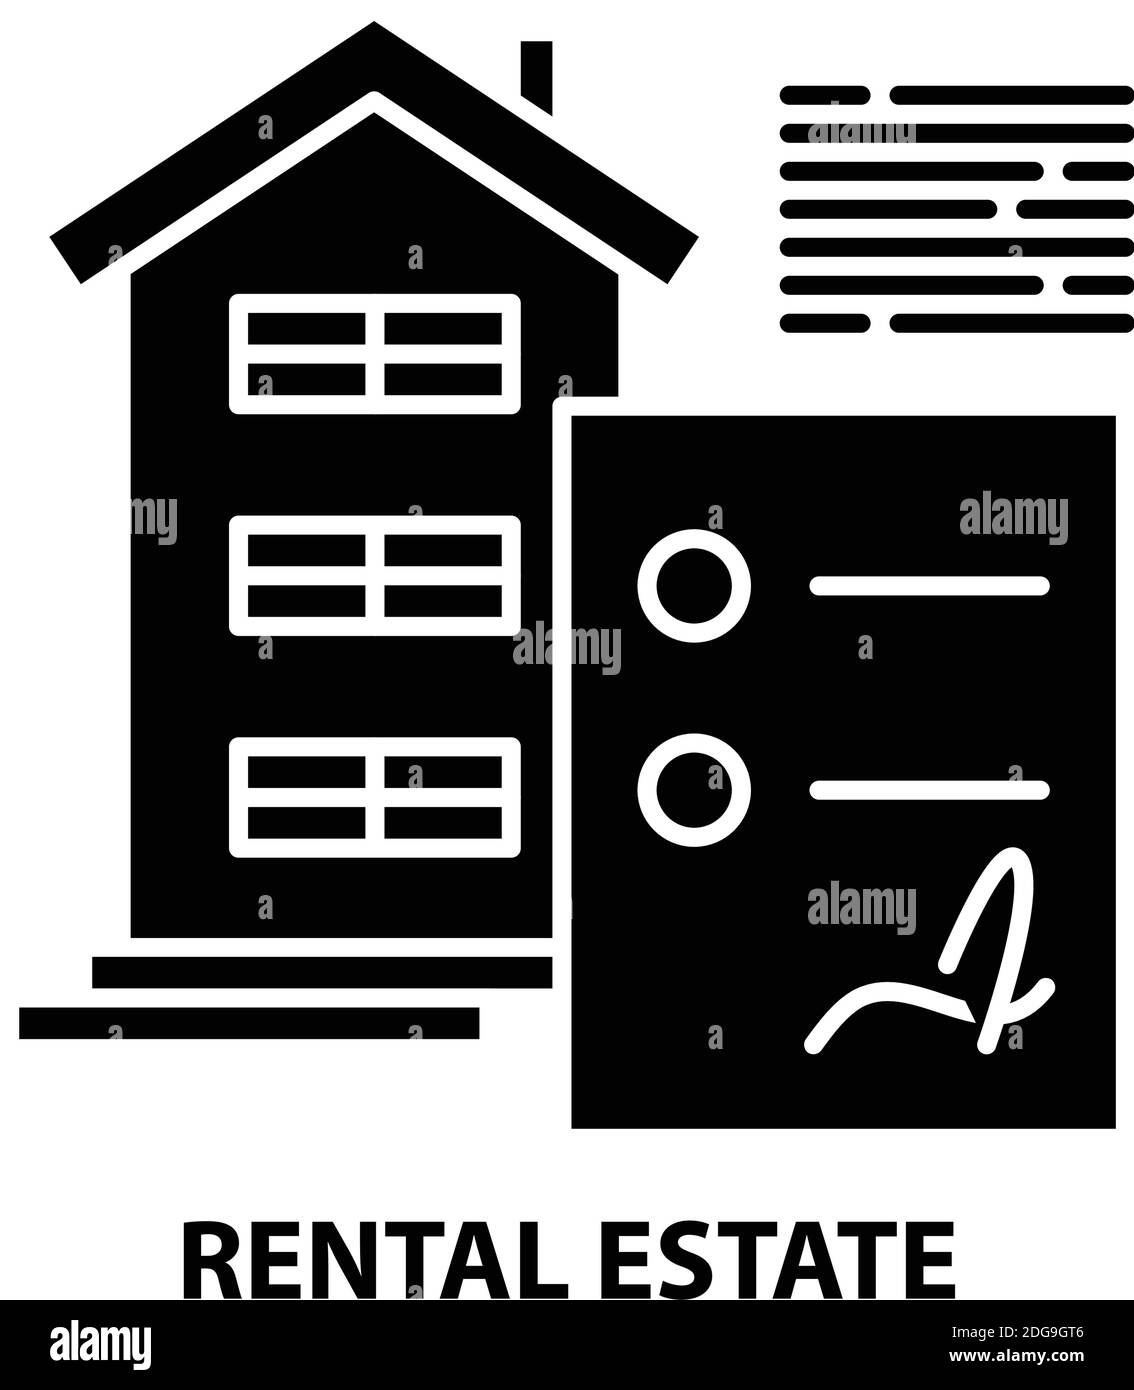 rental estate icon, black vector sign with editable strokes, concept illustration Stock Vector